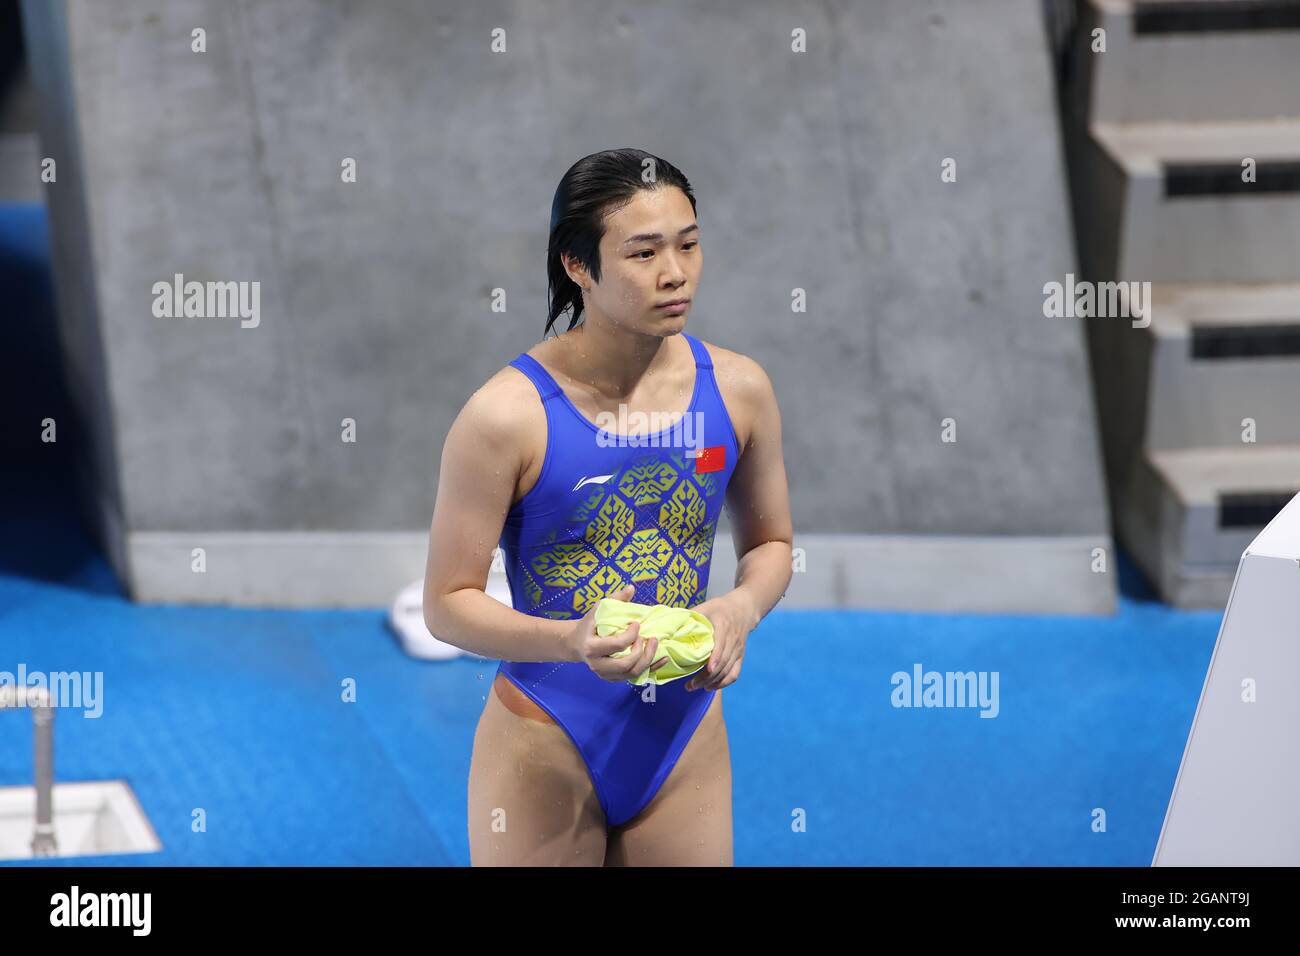 Diving shi tingmao [Chinese Athlete]